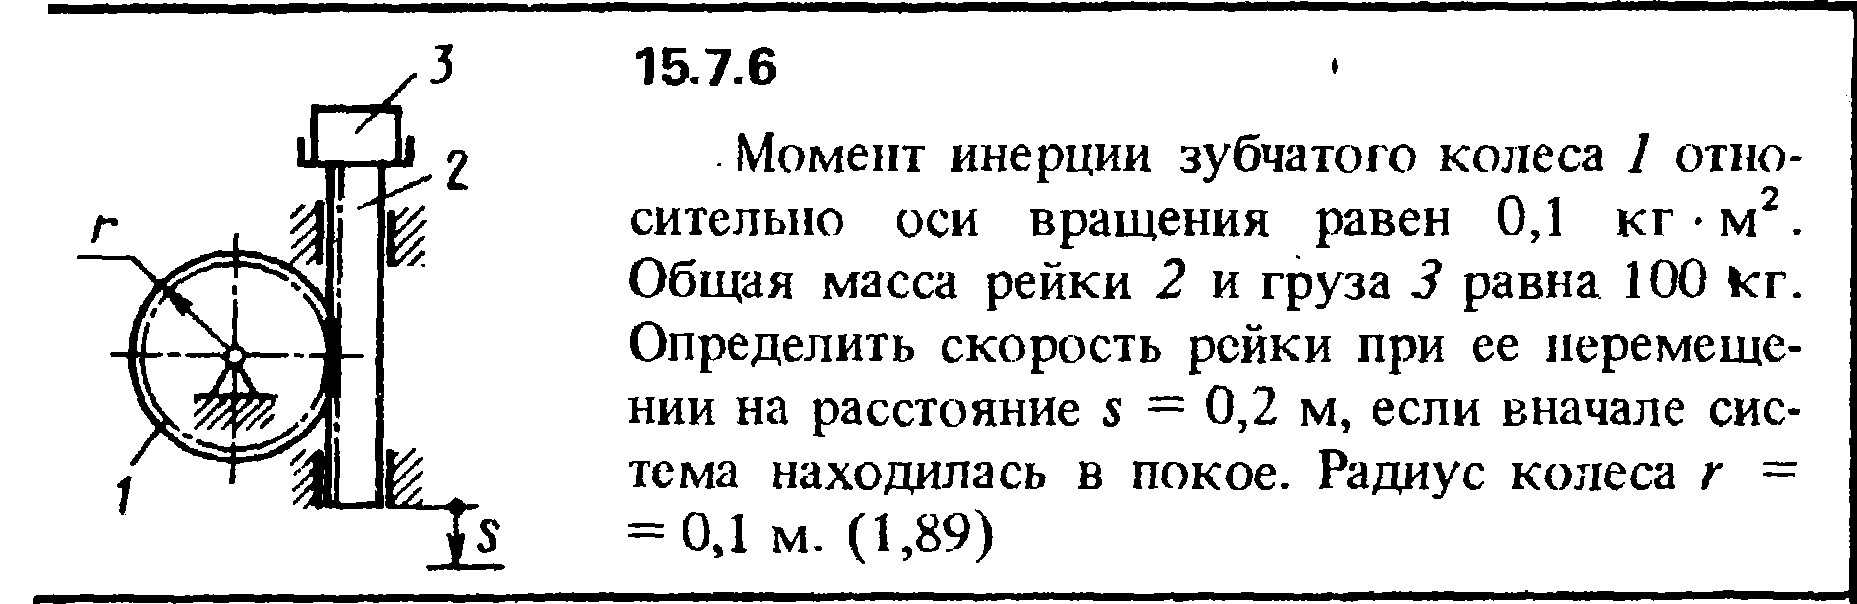 Решение задачи 15.7.6 из сборника Кепе О.Е. 1989 года